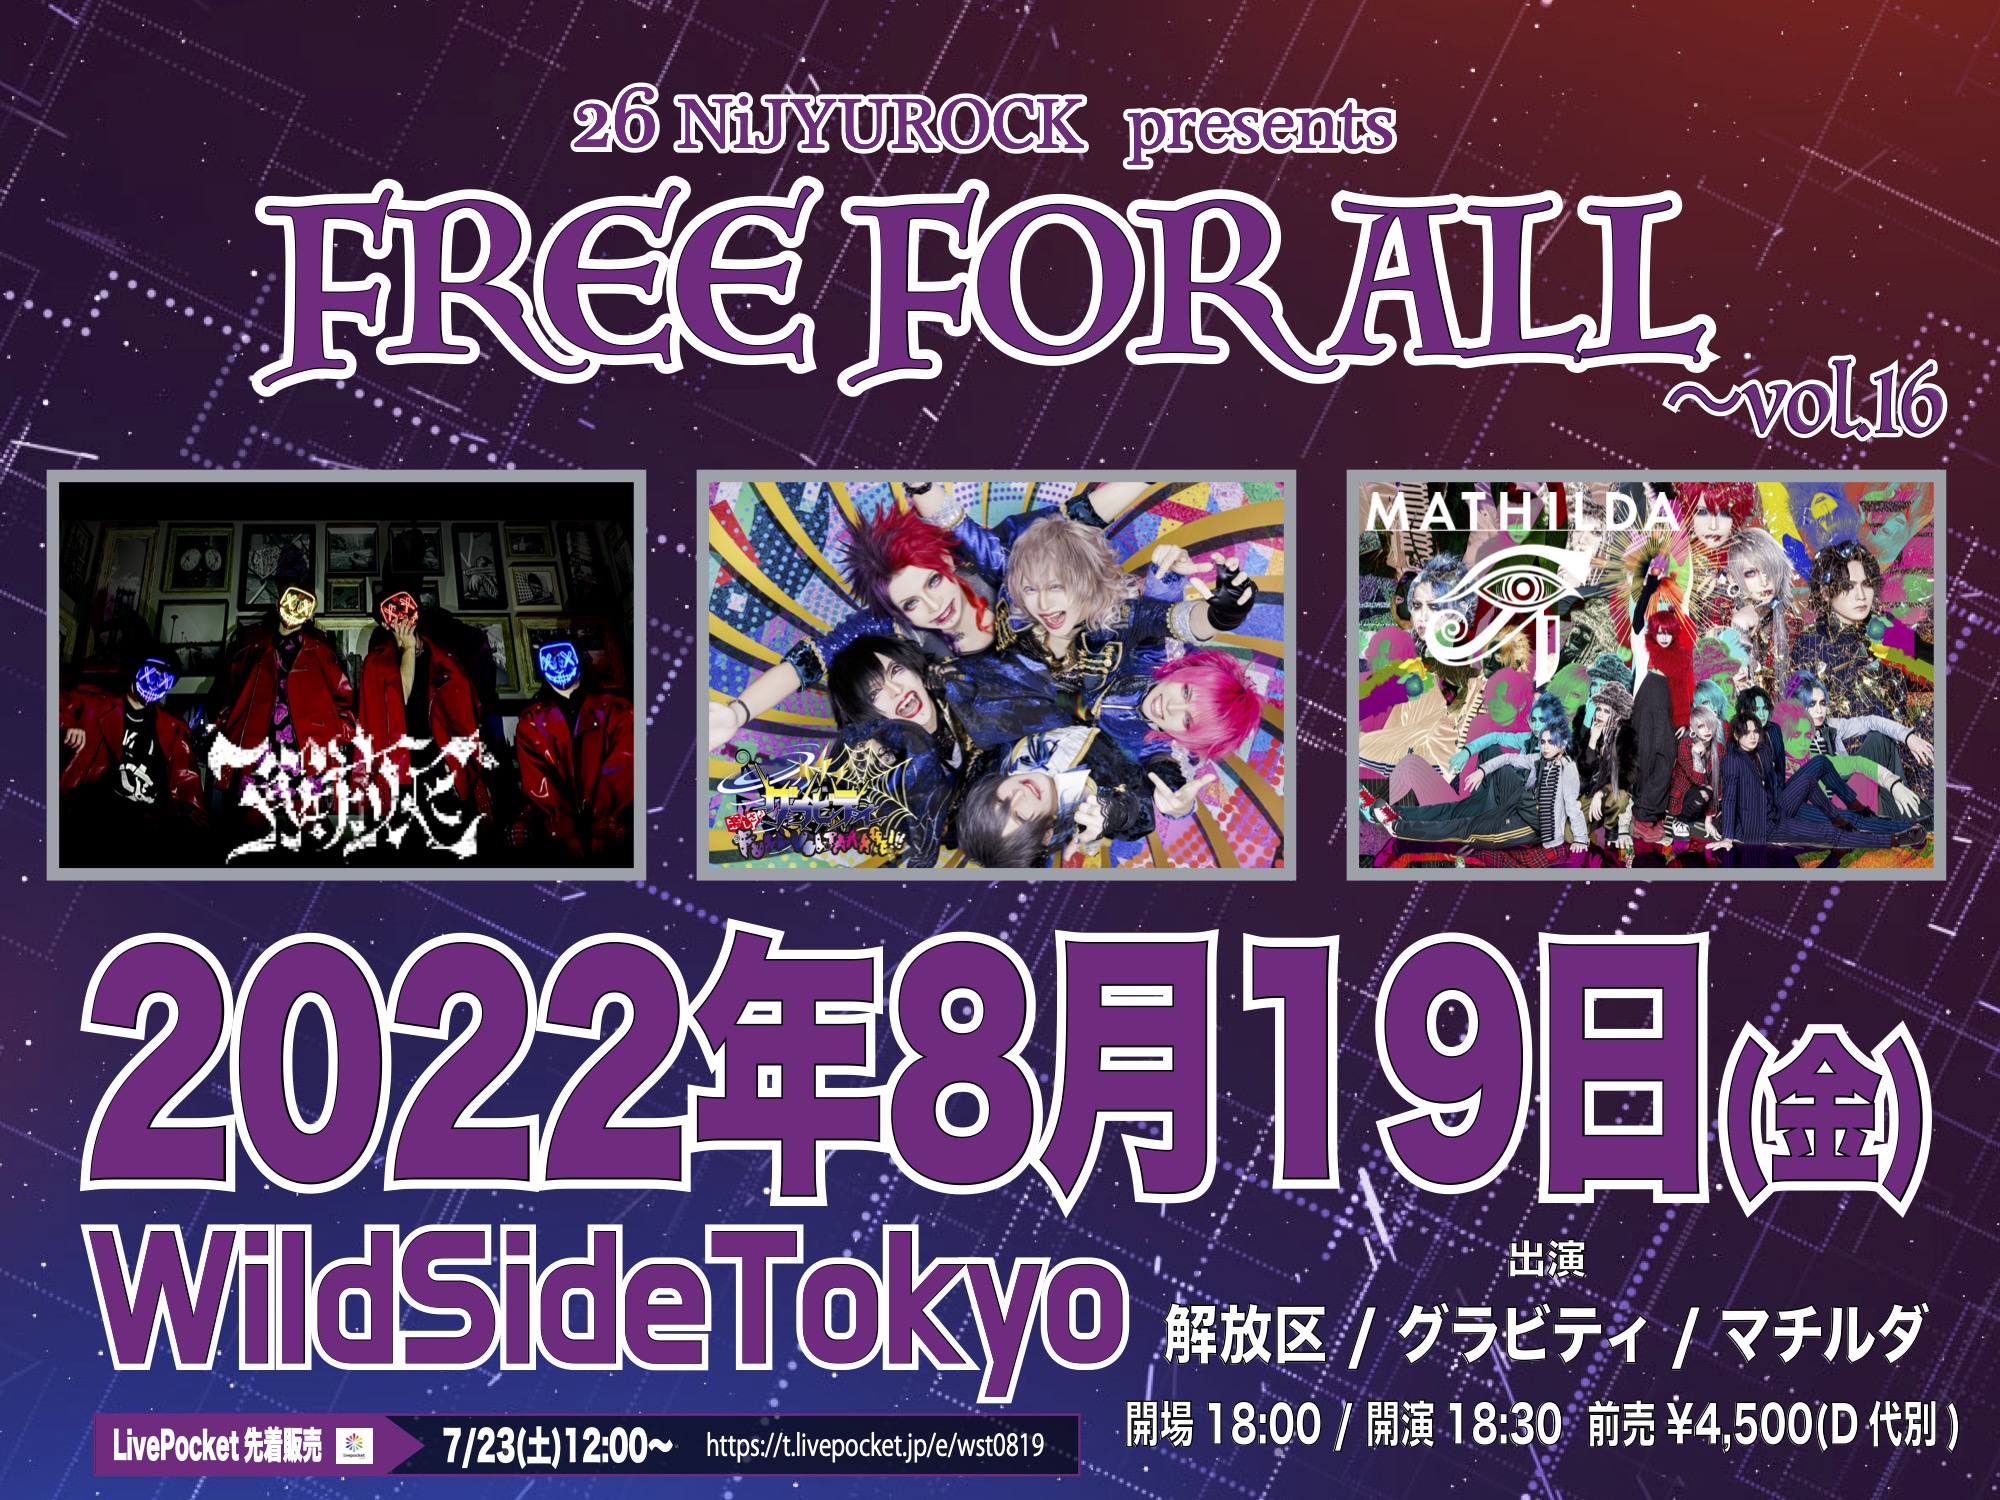 26 NiJYUROCK presents FREE FOR ALL〜vol.16